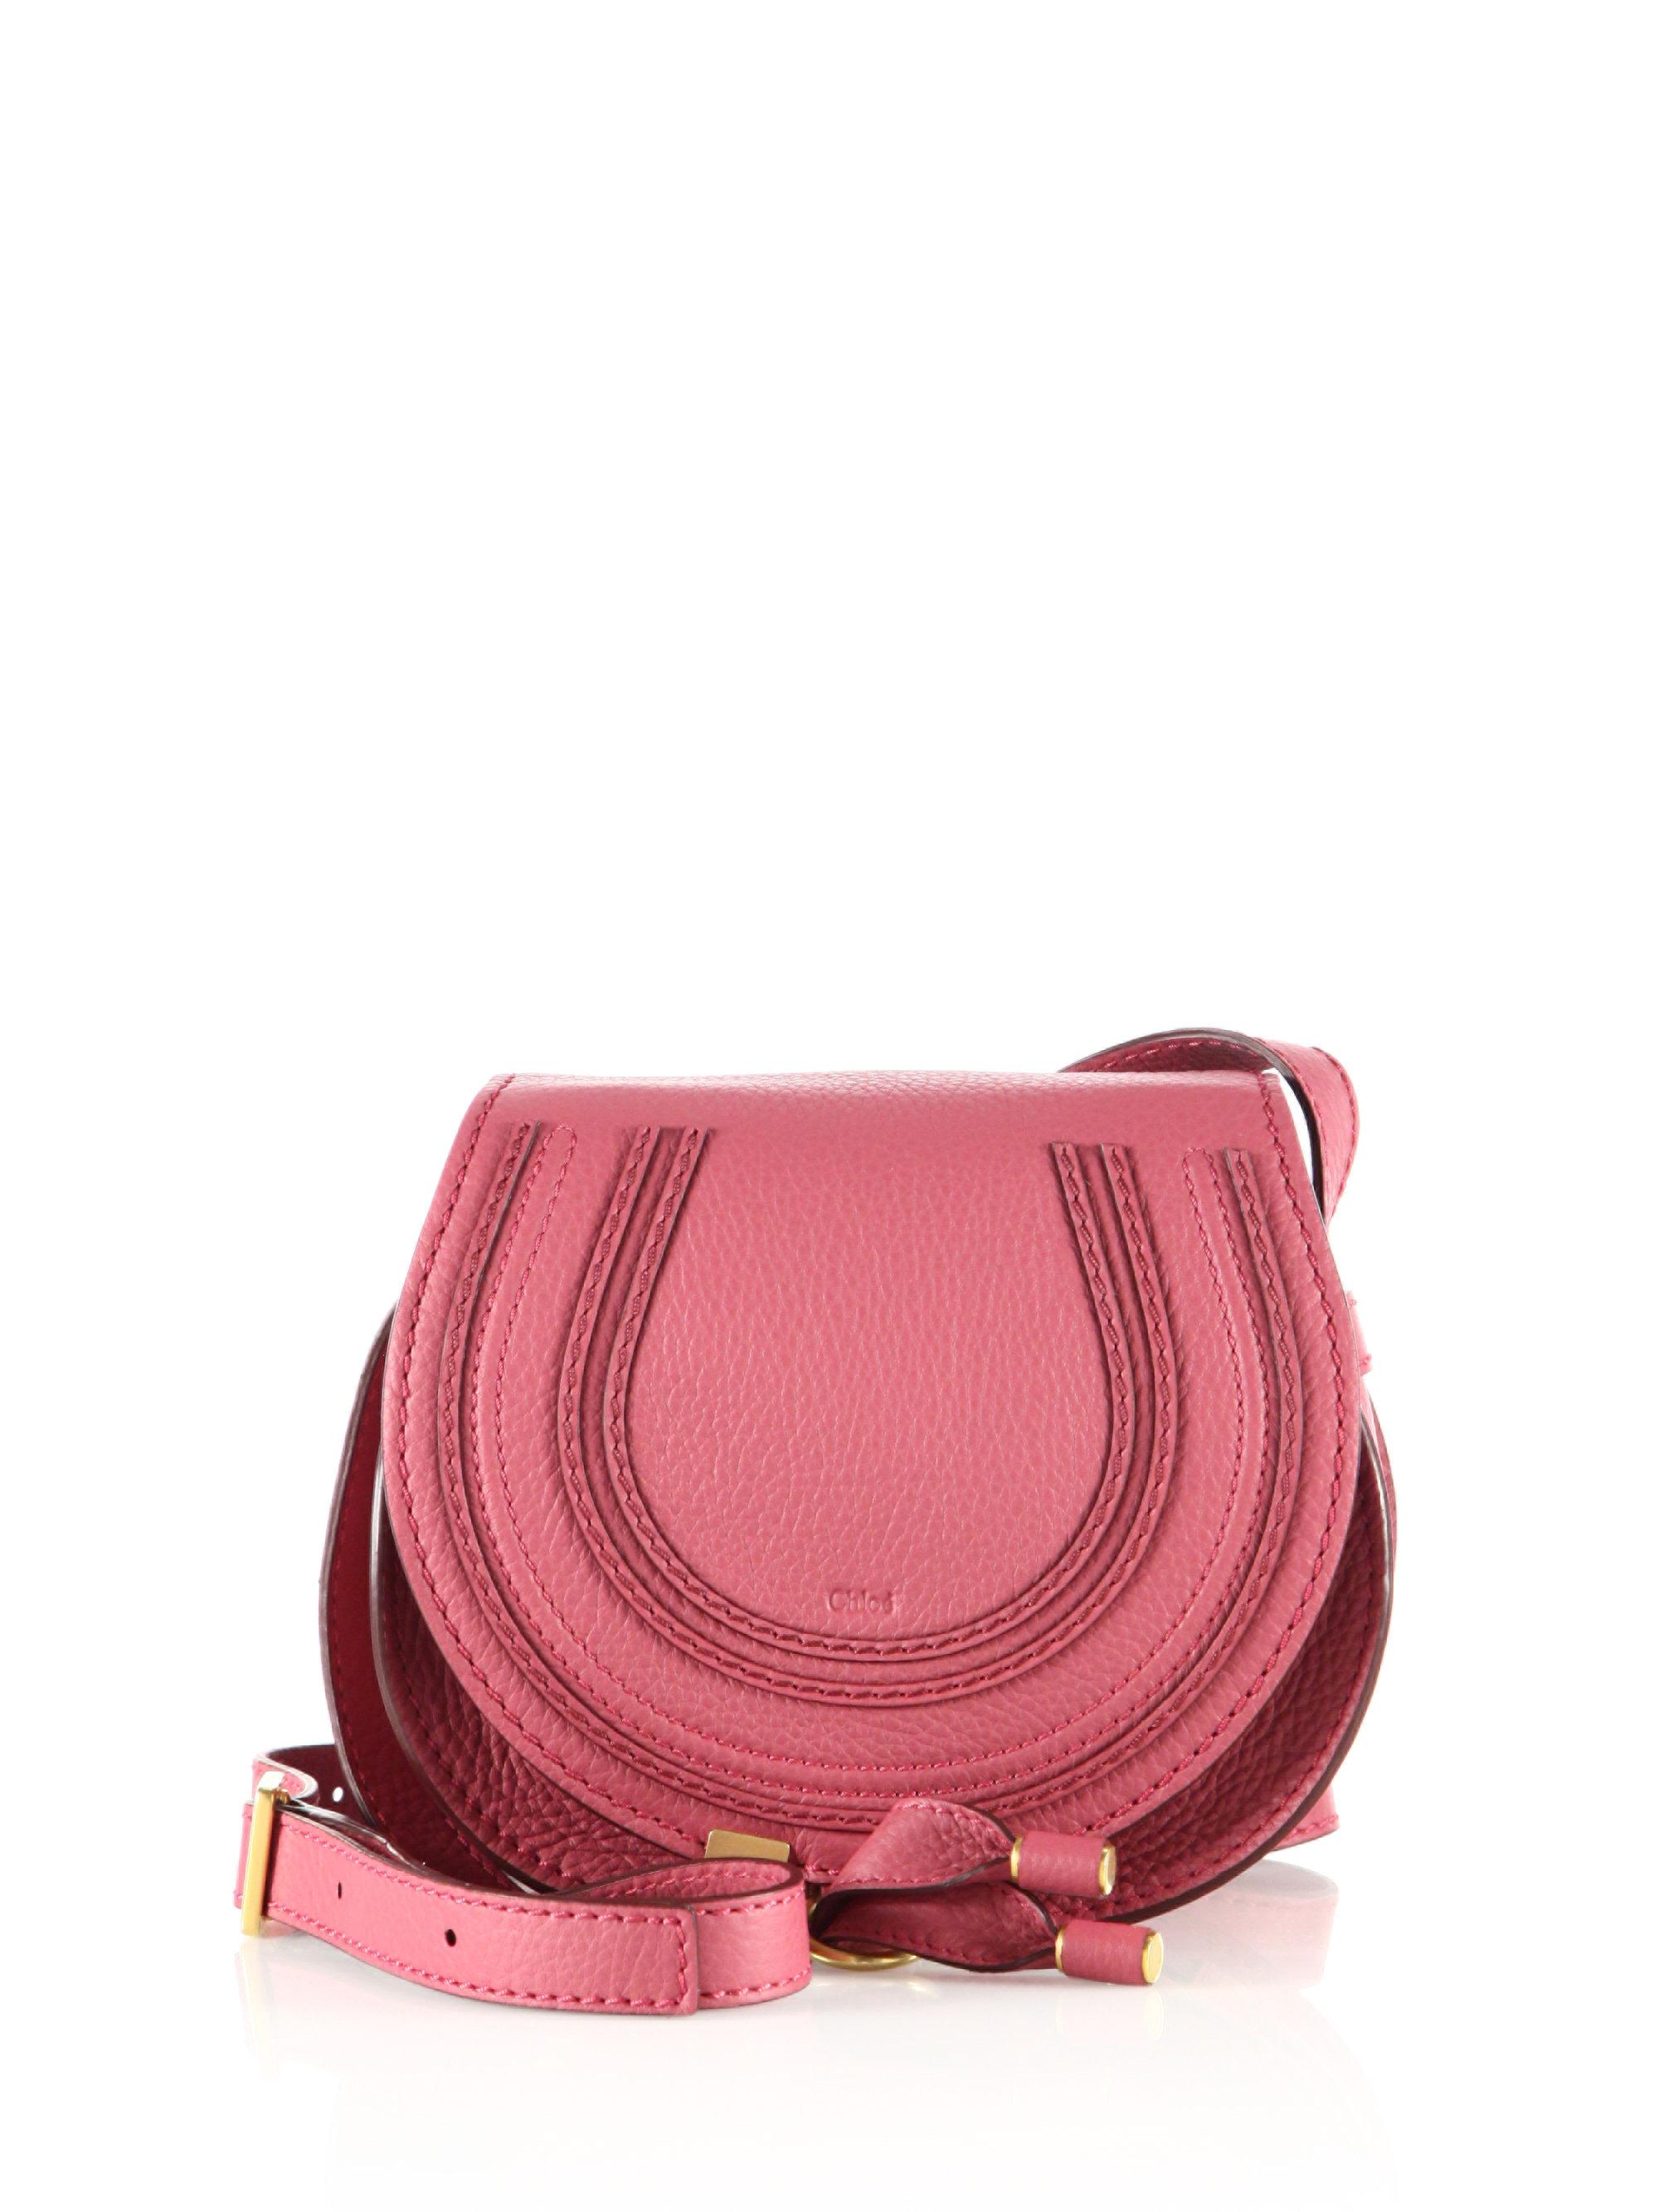 Chloe Mini Drew Genuine Leather Foldover Crossbody Saddle Purse Bag Pink Cream